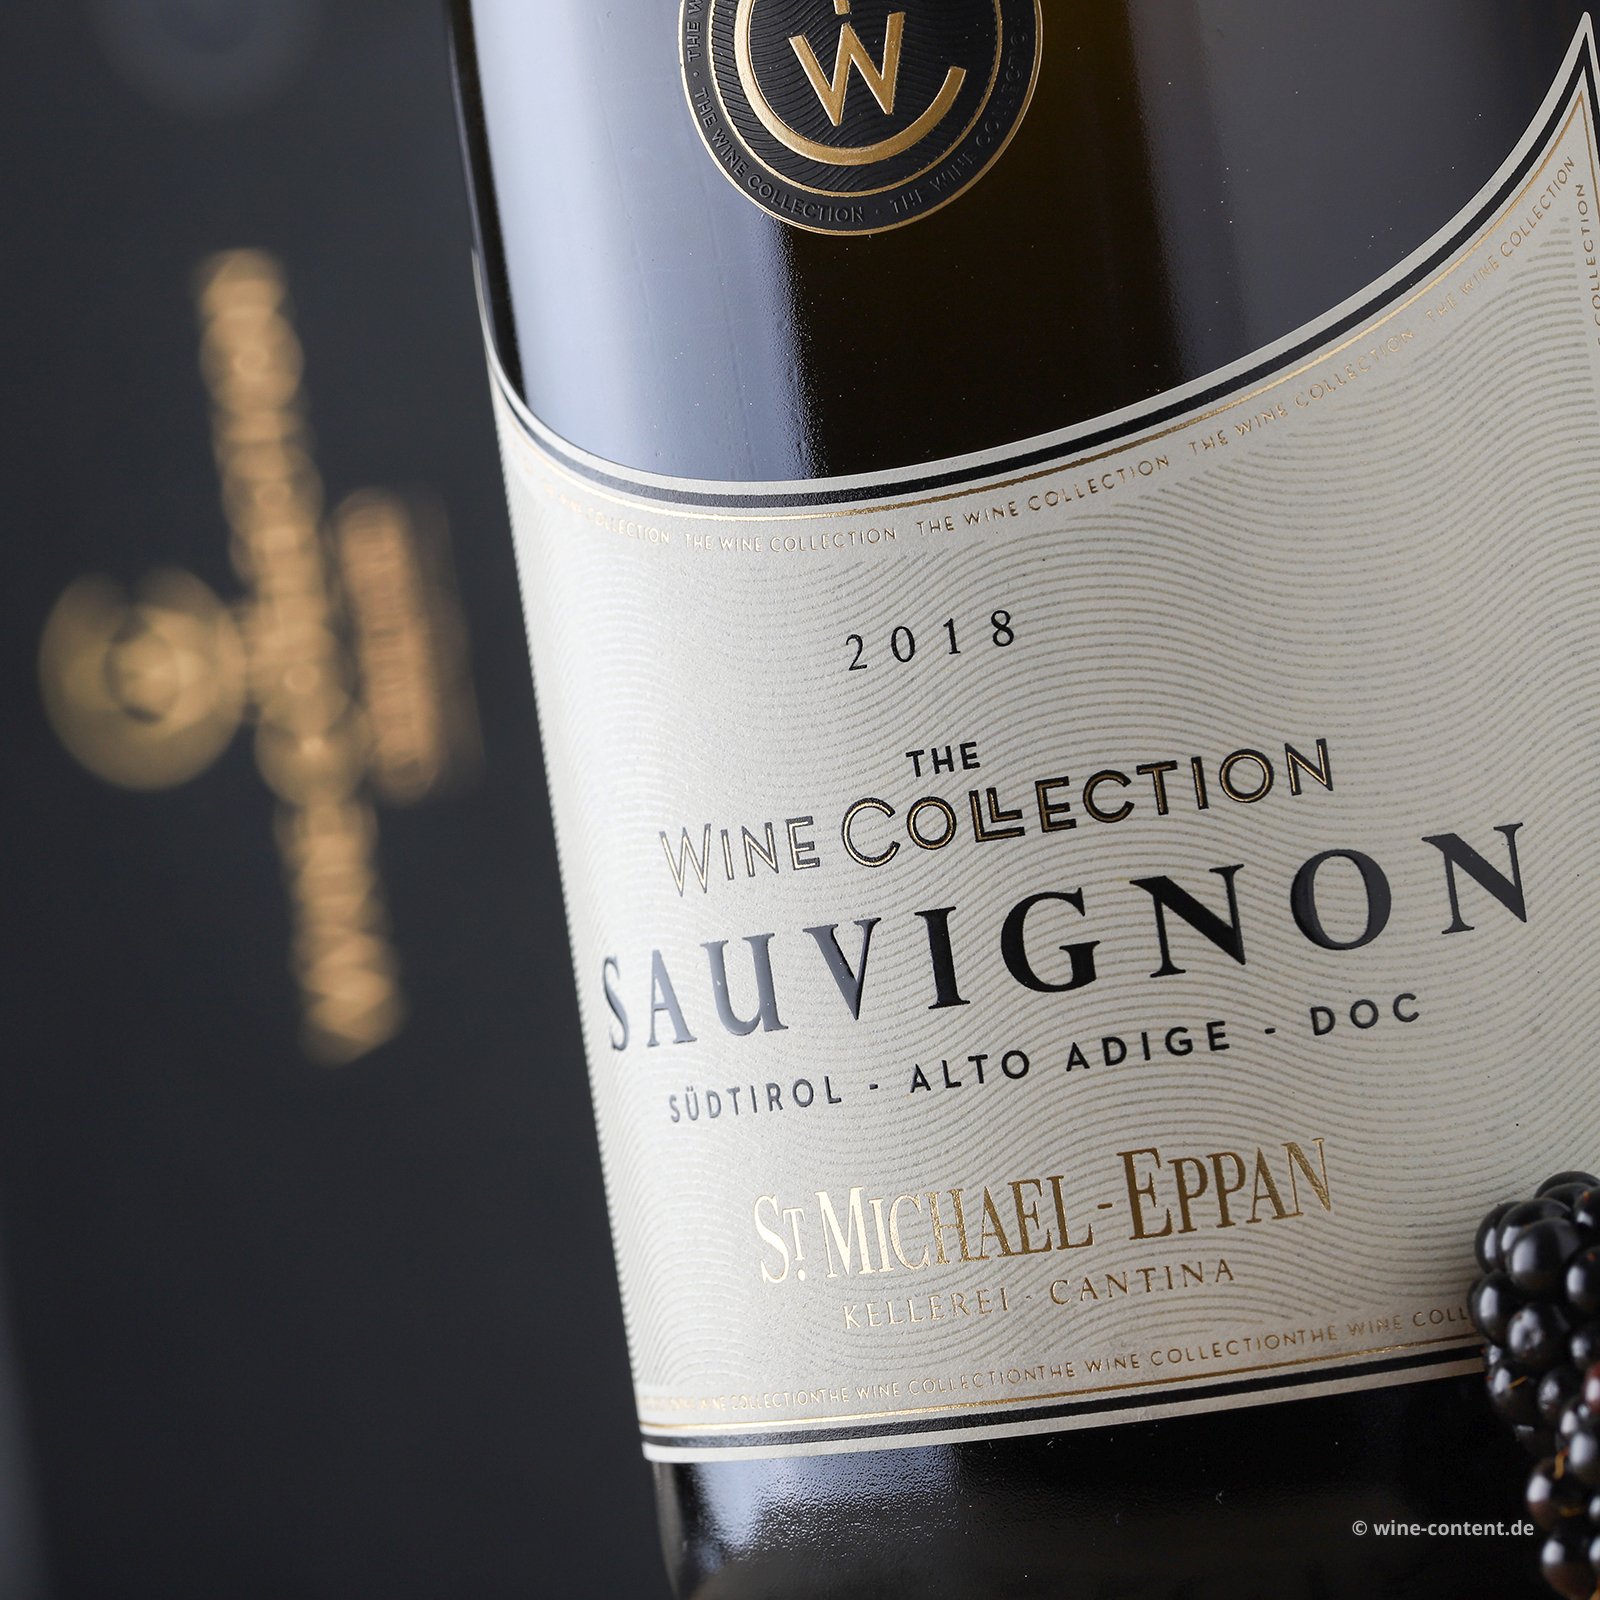 Sauvignon Blanc 2018 Wine Collection